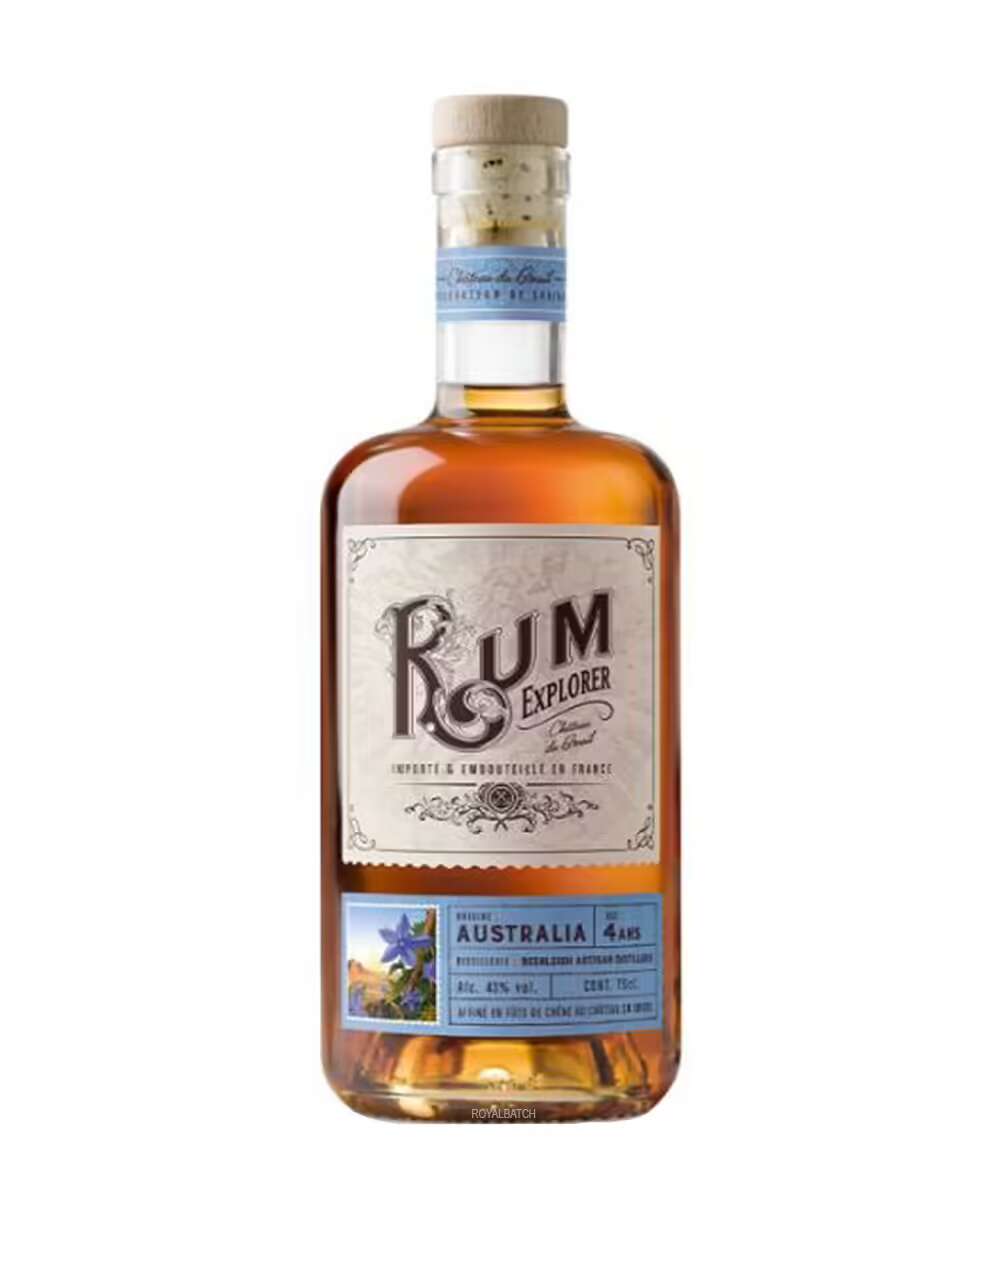 Rum Explorer Australian 4 Year Old